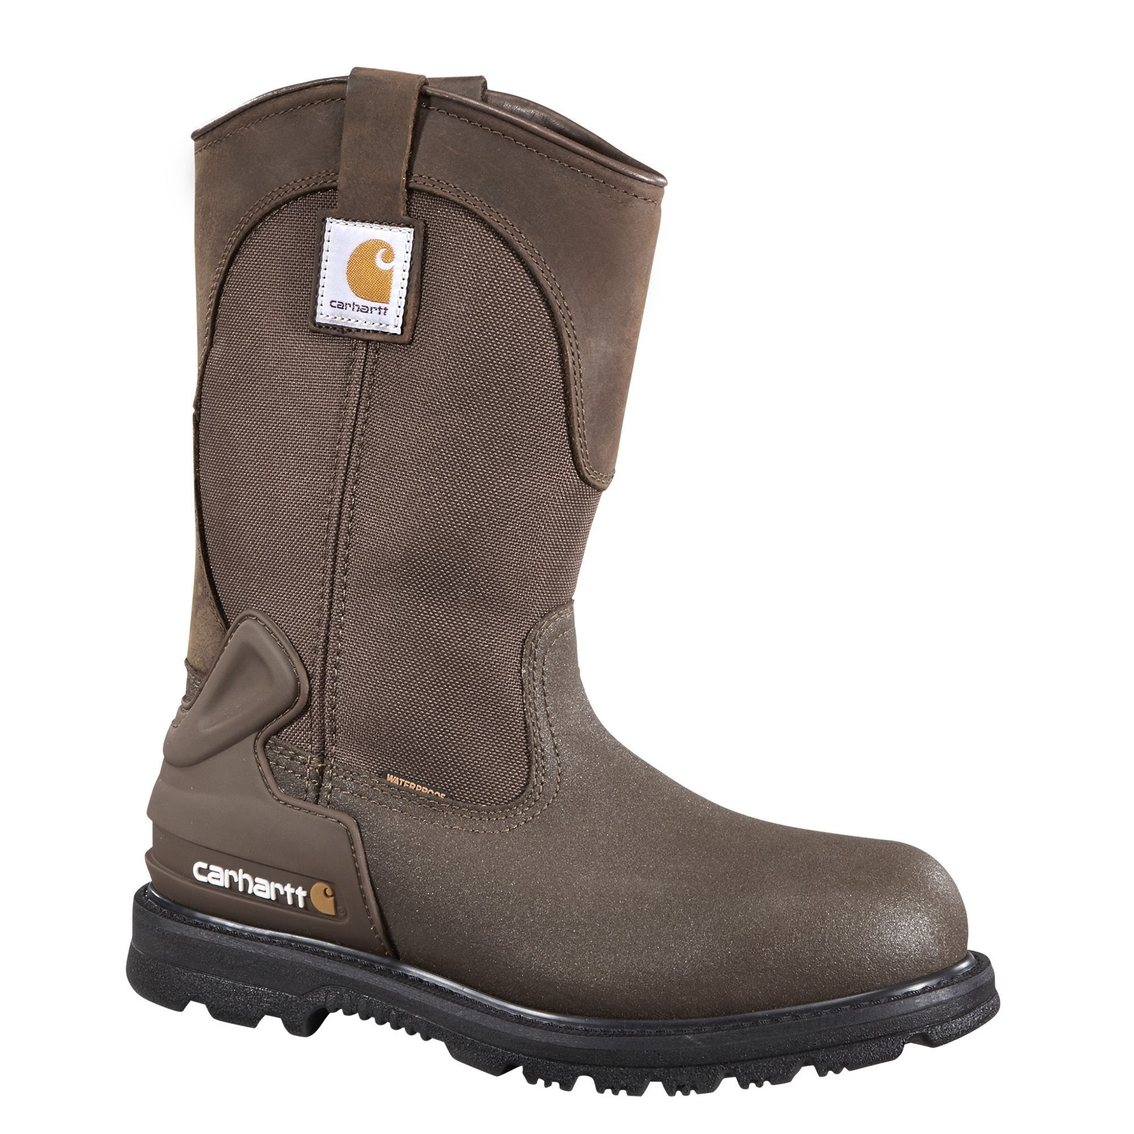 Carhartt Men's Waterproof Steel Toe Wellington Cmp1270 | Boots | Shoes ...